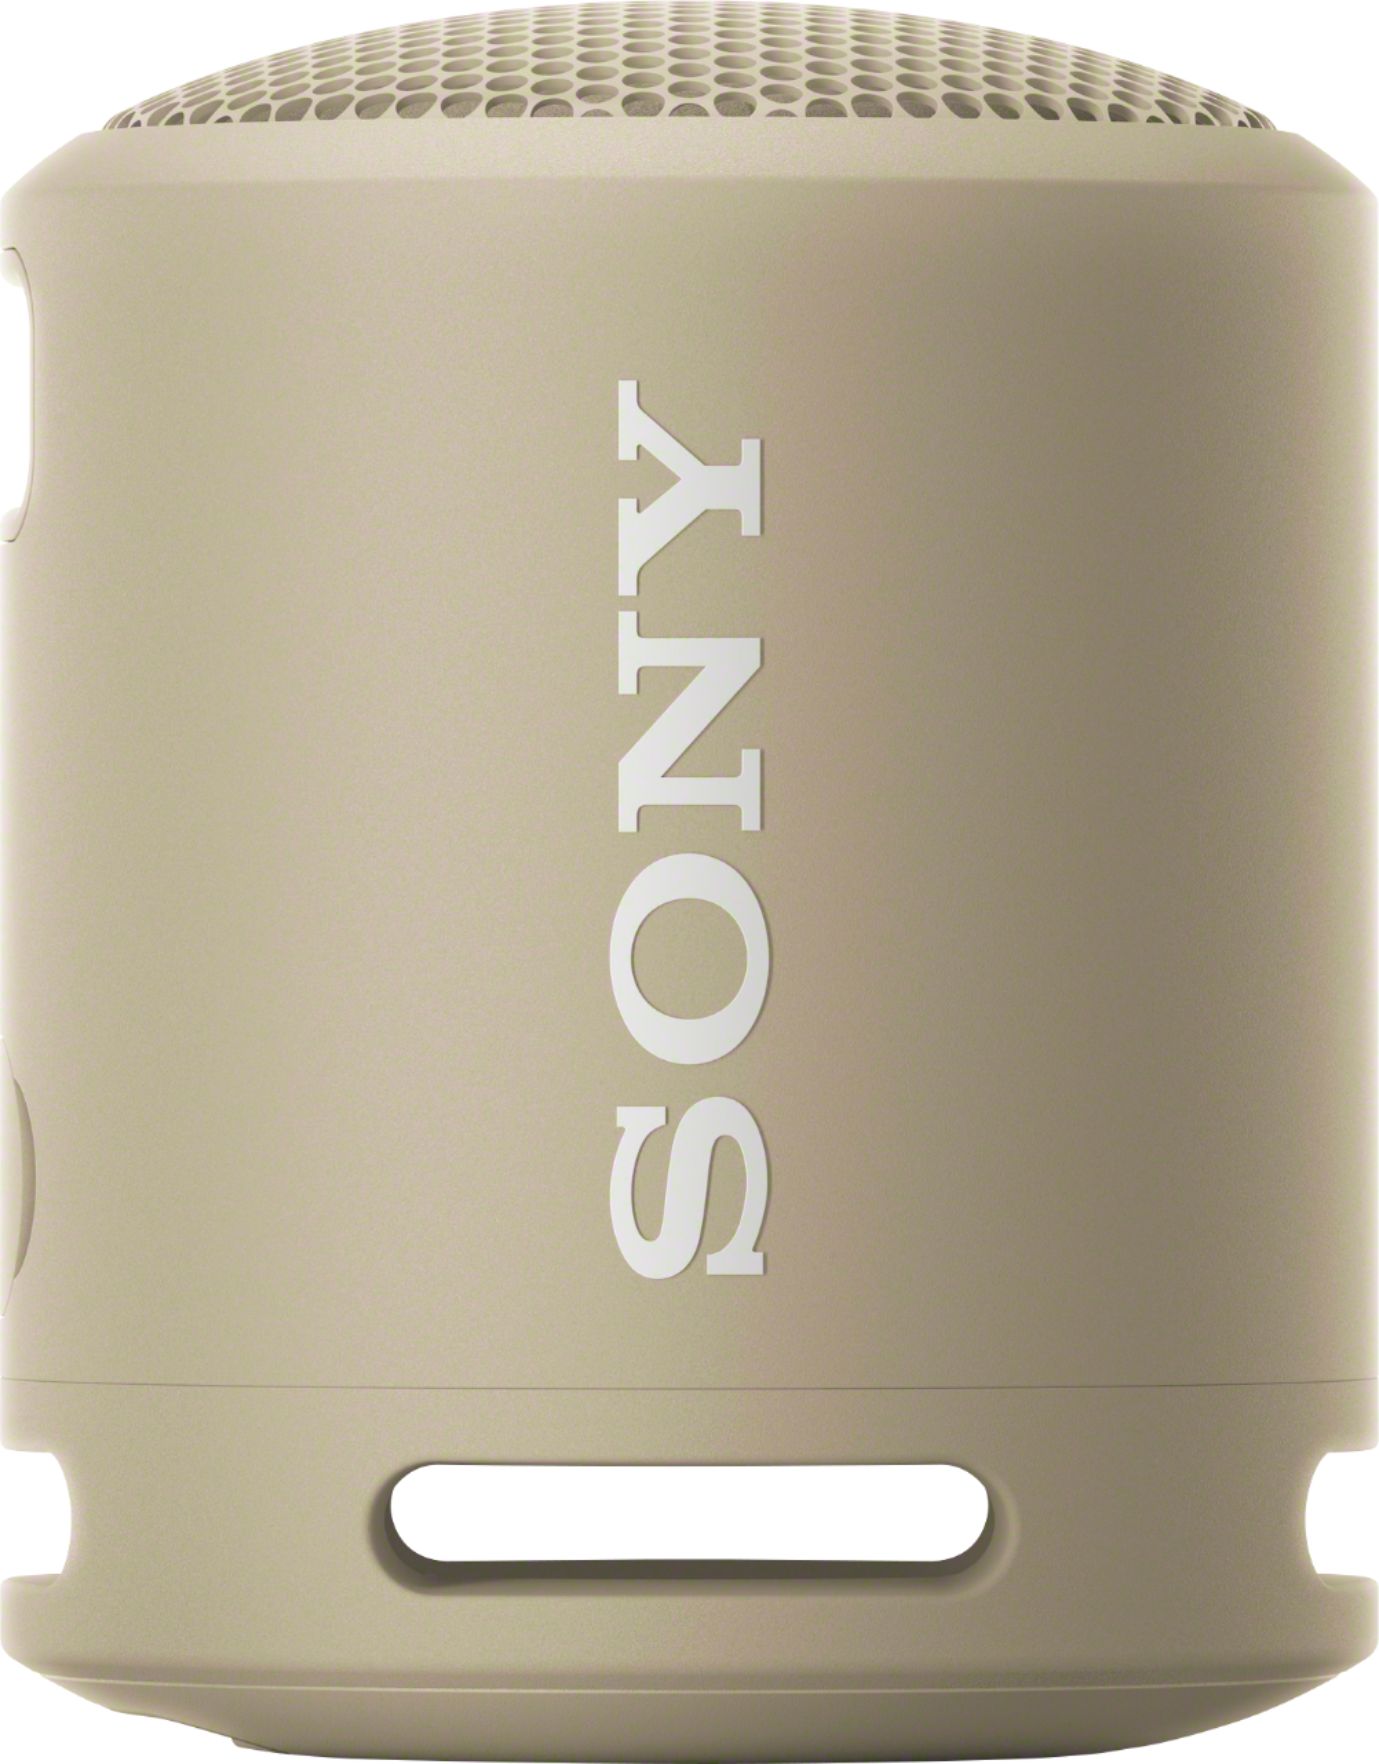 Sony SRS-XB13 EXTRA BASS Portable Waterproof Wireless Bluetooth